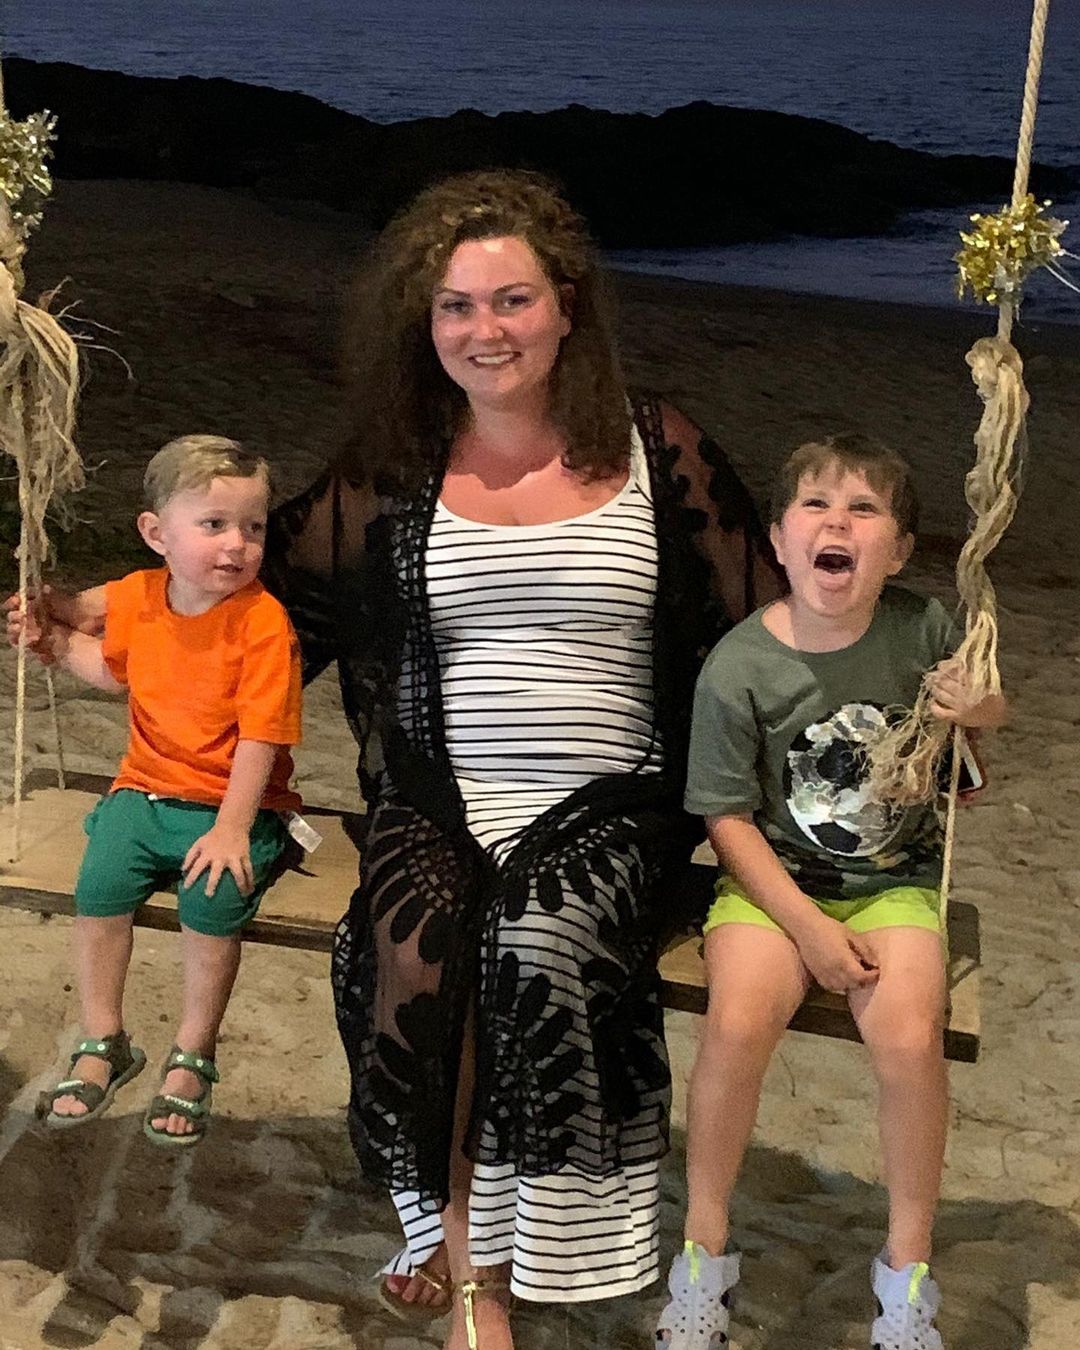 Dagmara Malczewska with sons on a swing in beach area